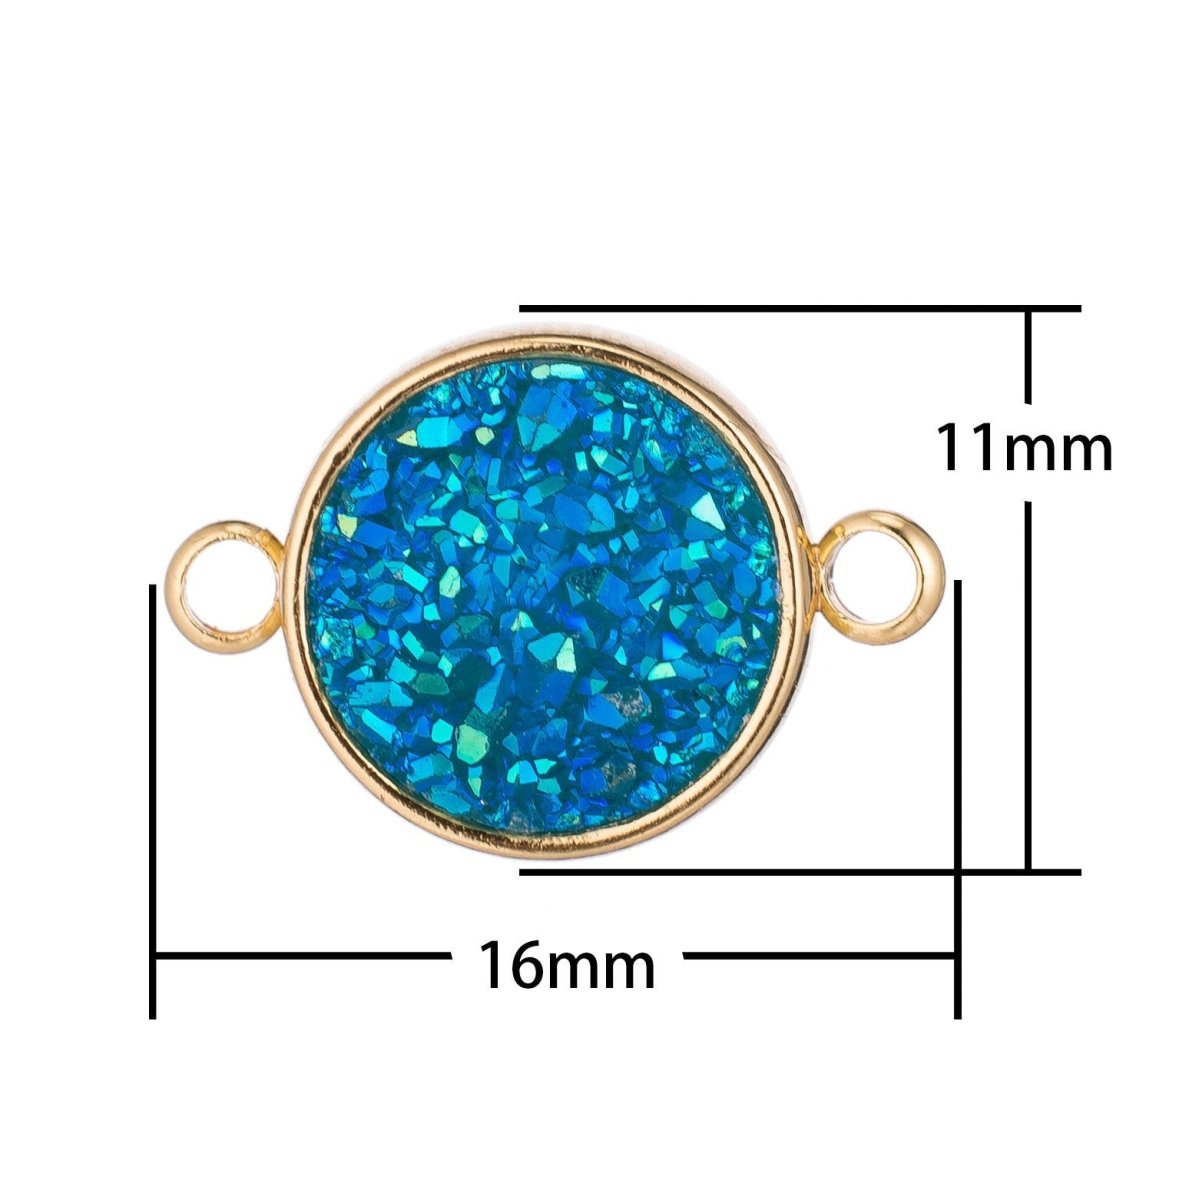 Gold Aqua Blue Round Druzy Drusy Agate Gemstone DIY Dainty Gift Bracelet Charm Bead Connector Double Bail Pendant for Jewelry Making F-400 - DLUXCA